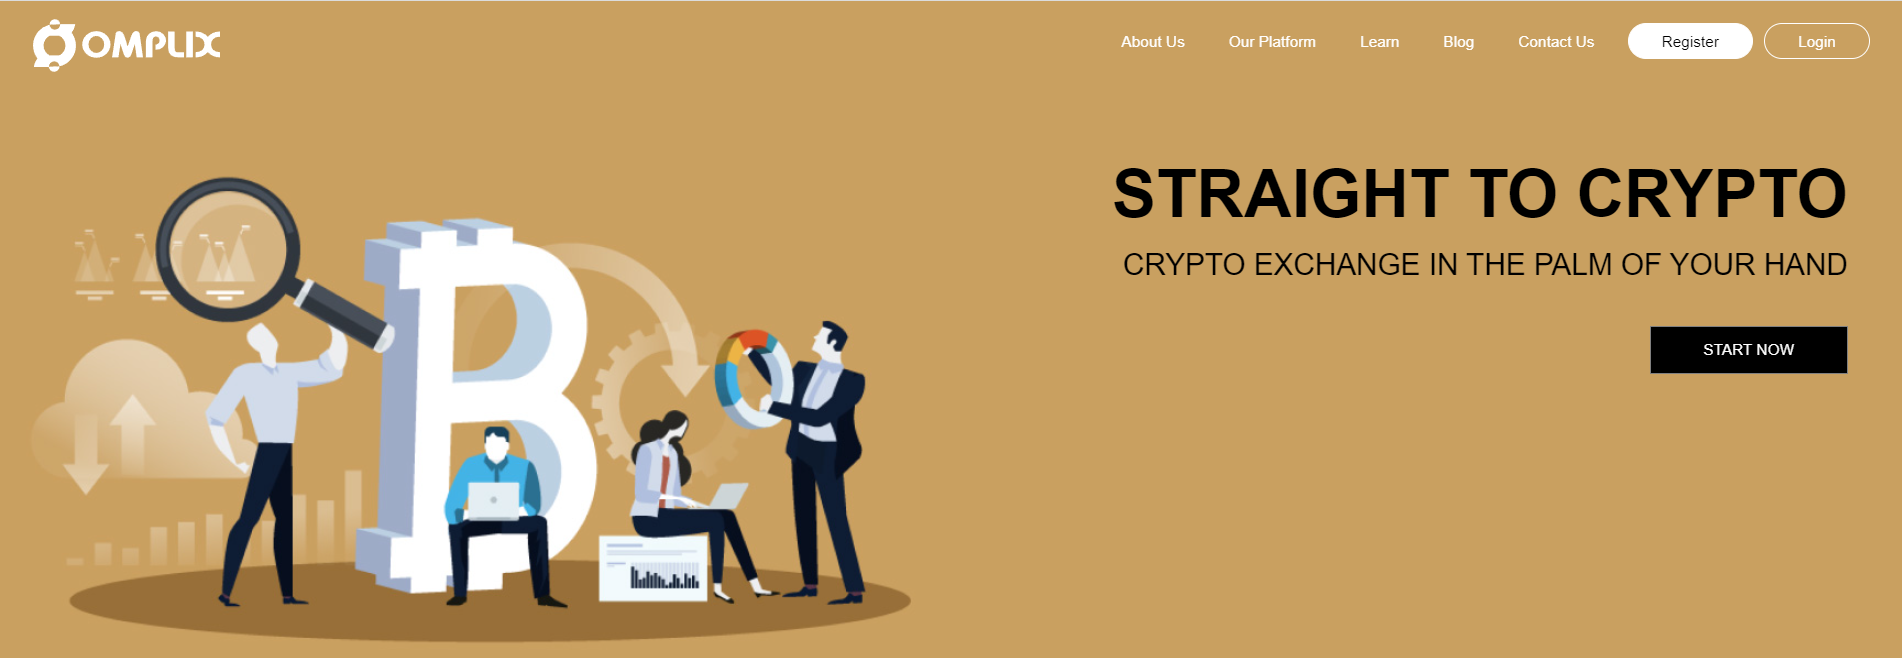 crypto trading via Omplix